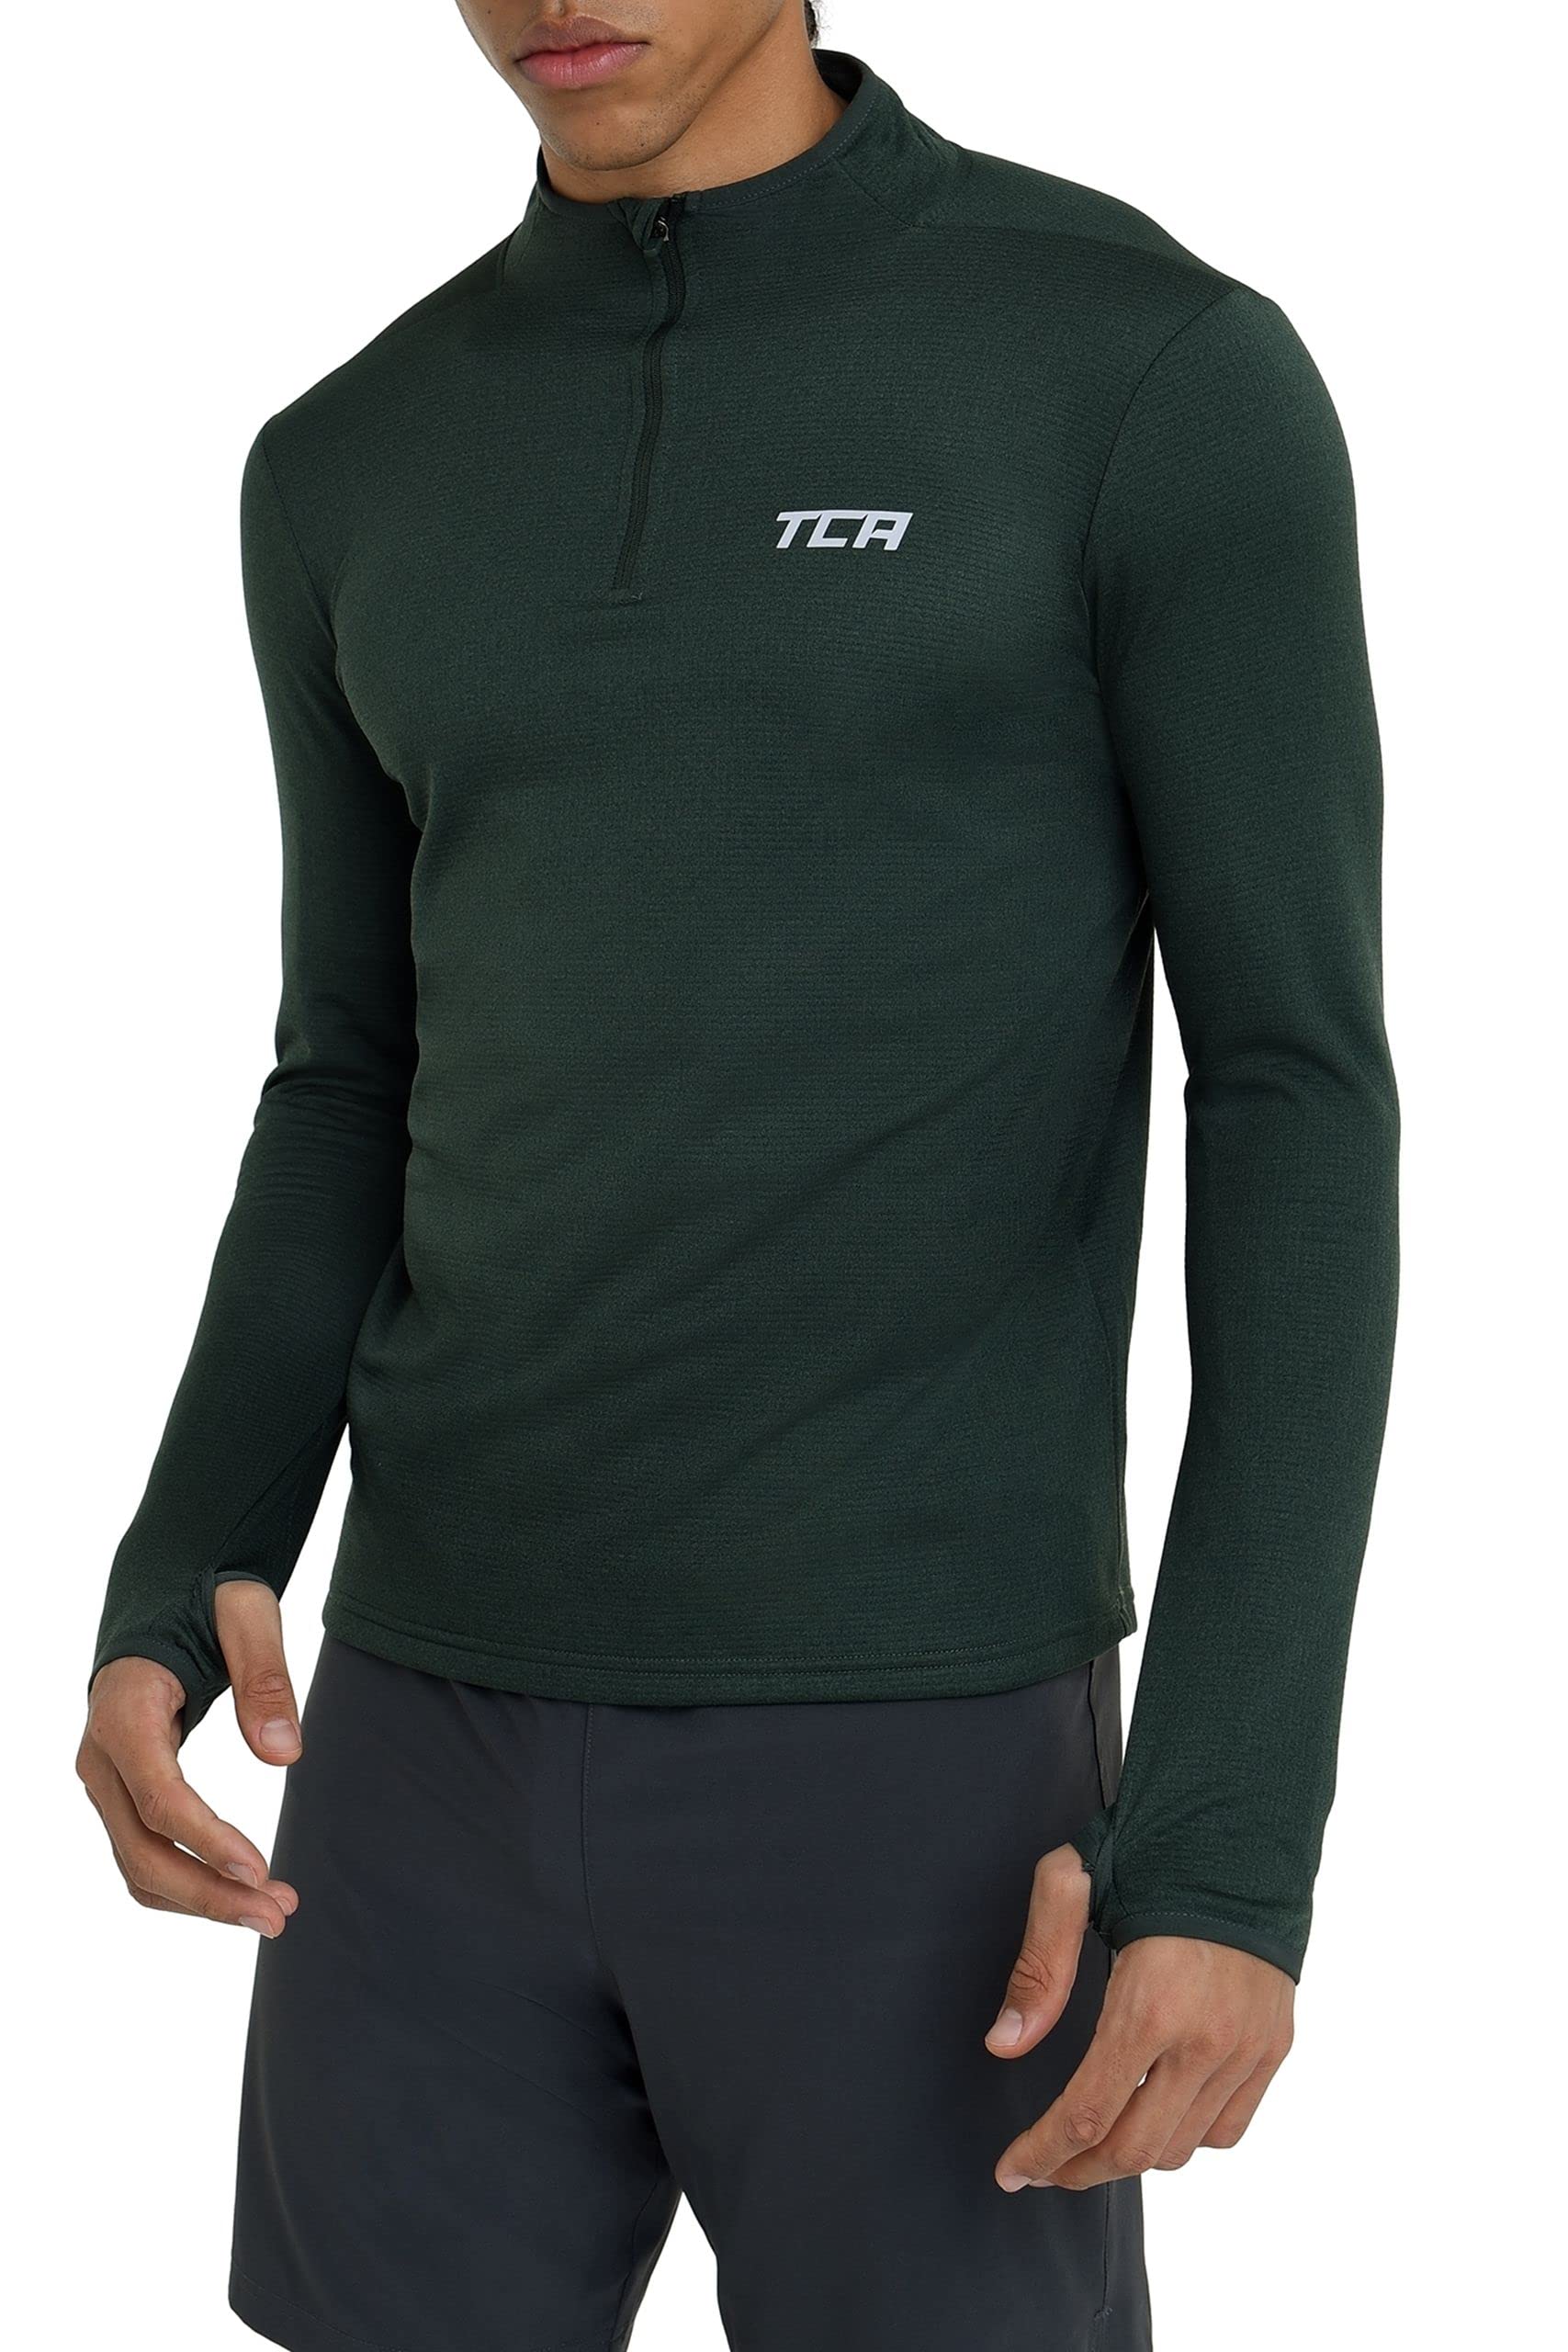 TCA Herren Cloud Fleece mit Brust Reißveschluss - Thermo Sporttop Laufshirt - Dunkelgrün, XXL